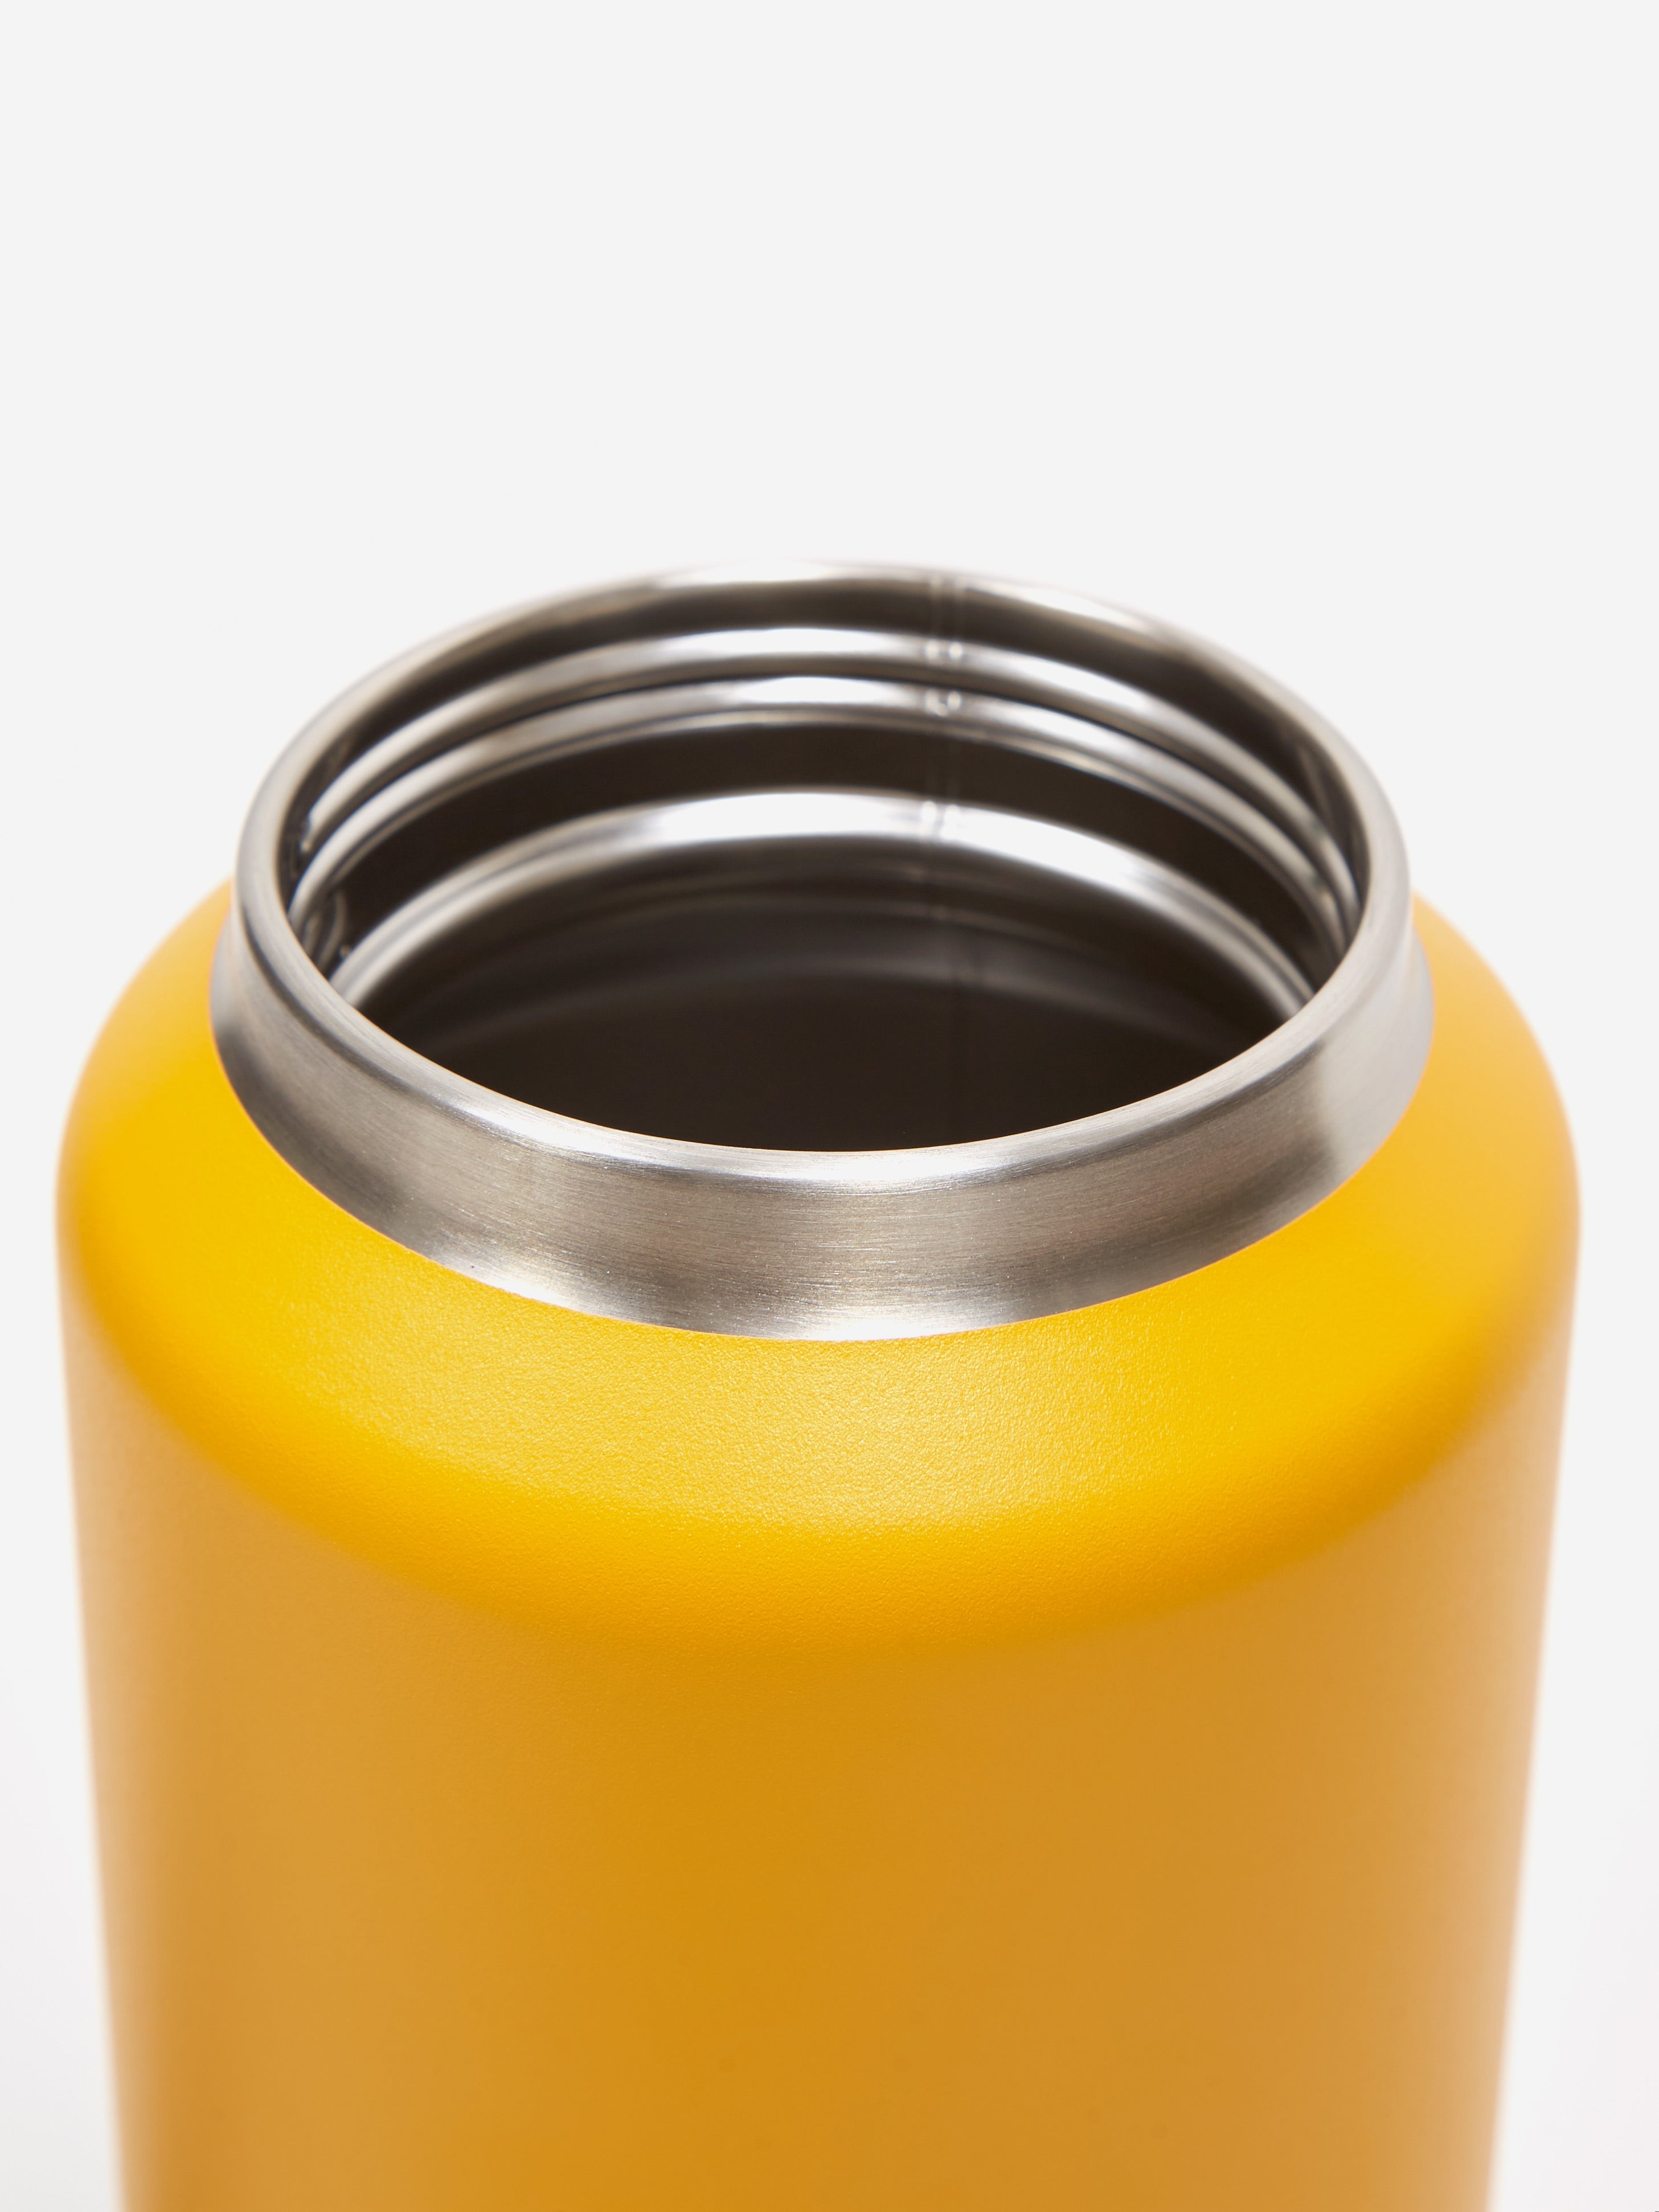 YETI Rambler 46 oz Bottle with Chug Cap in Alpine Yellow 